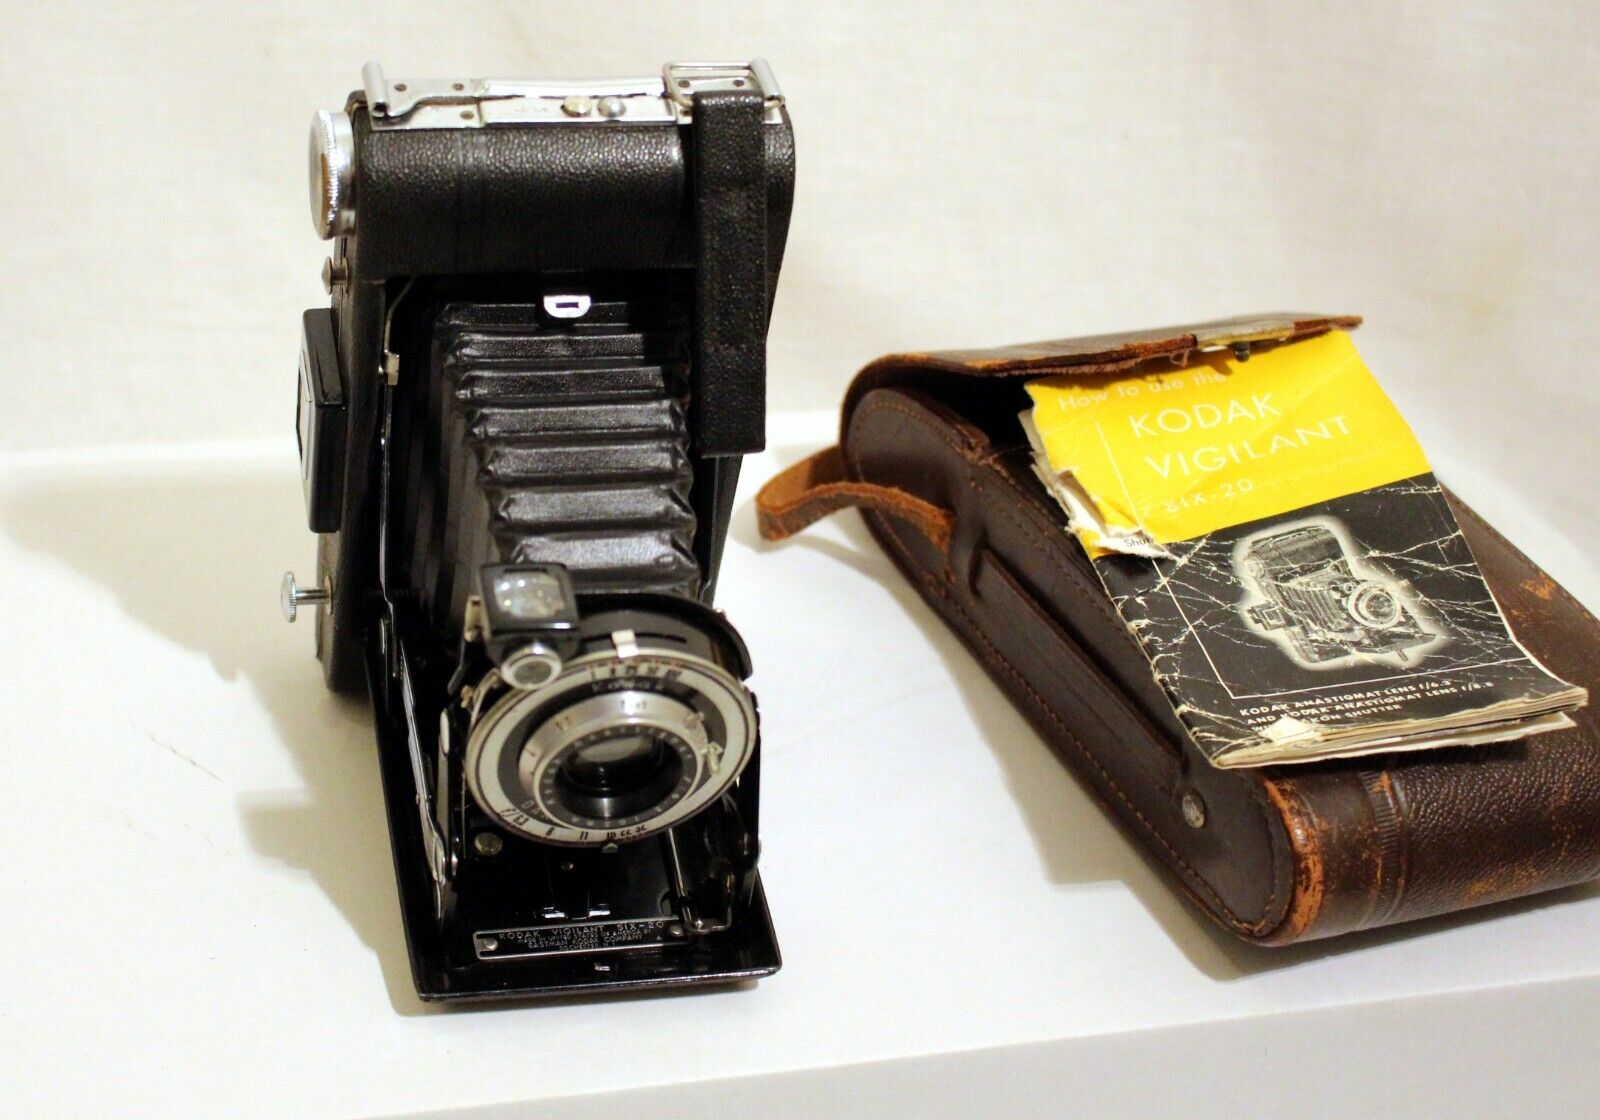 Vintage Kodak camera model Vigilant six - 20 with original case and manual